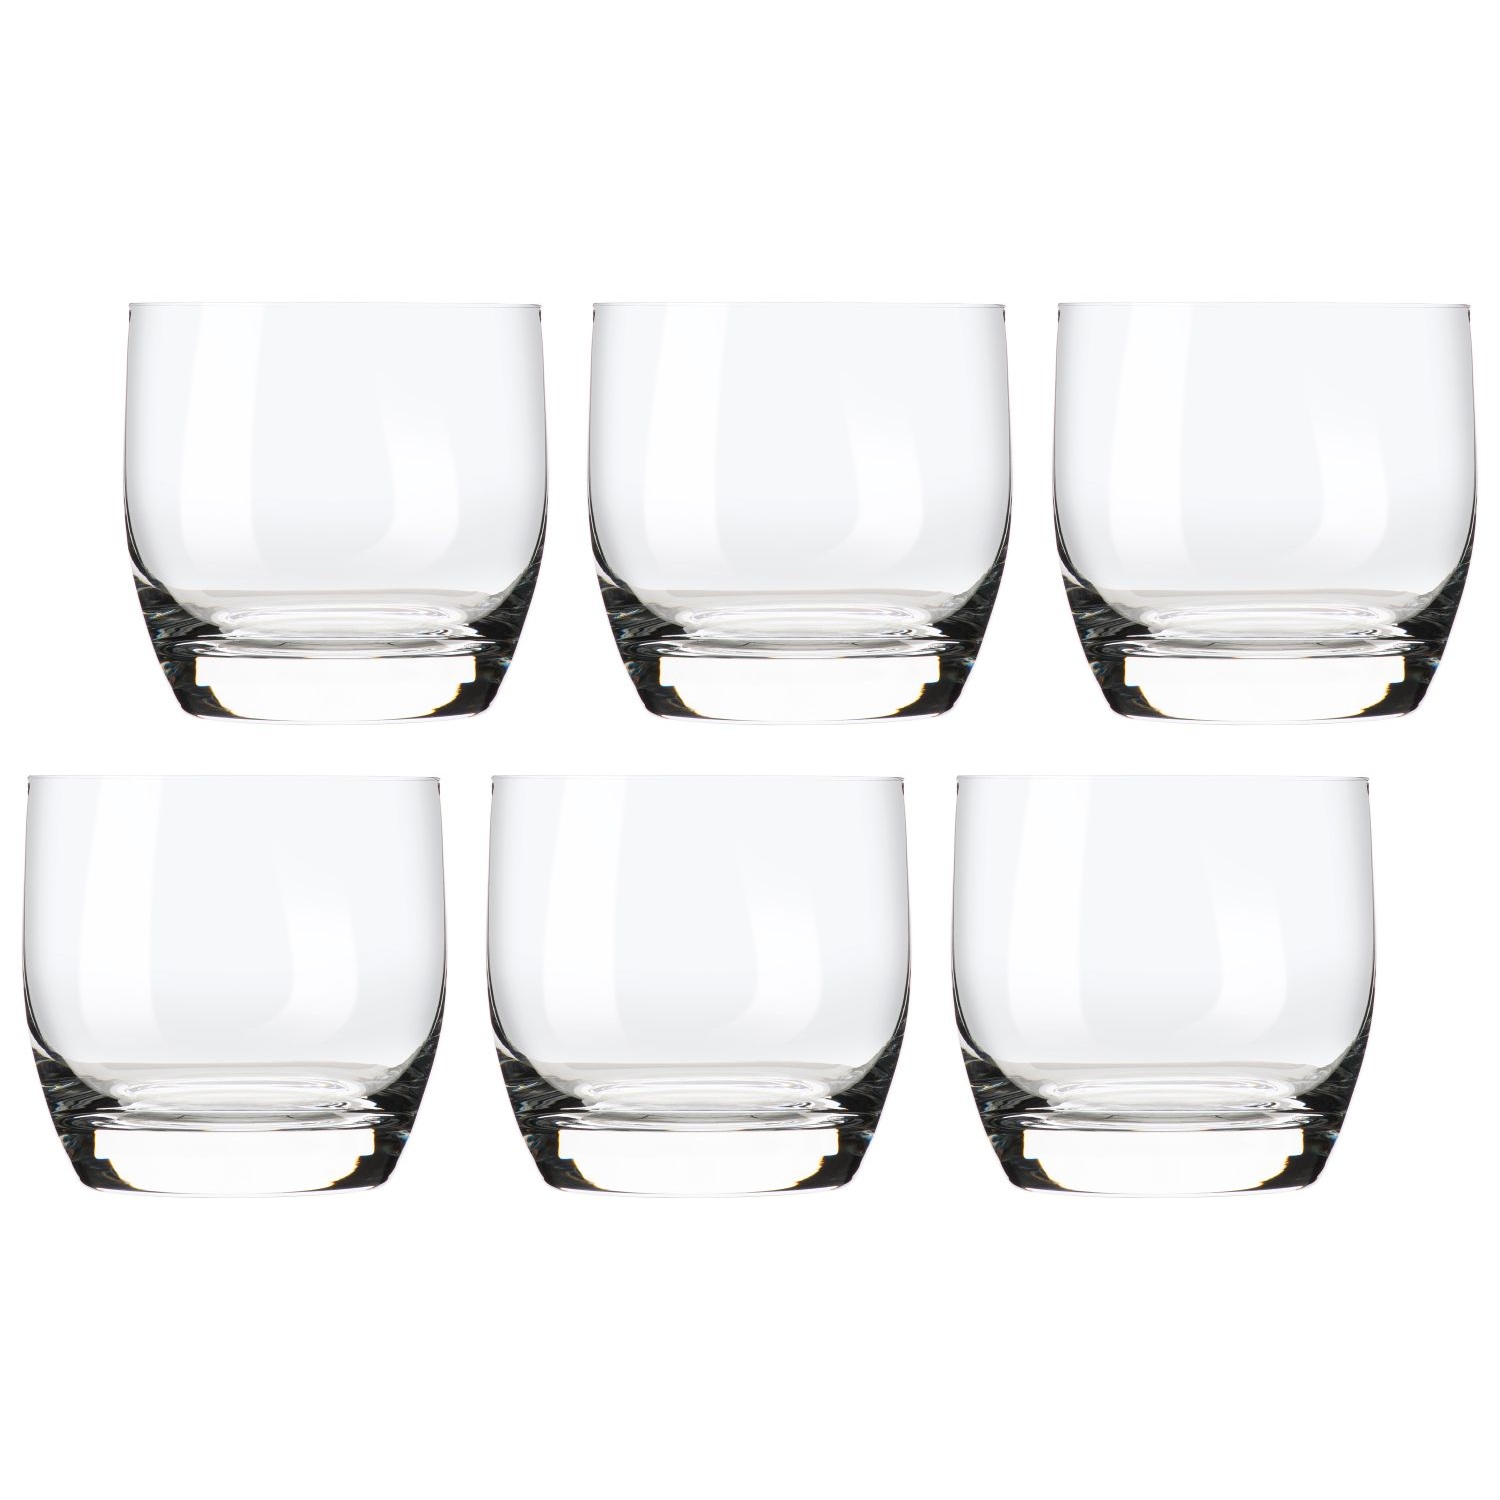 Набор стаканов Maxwell & Williams Cosmopolitan для виски 0,34 л набор стаканов снегири на рябине 6 шт